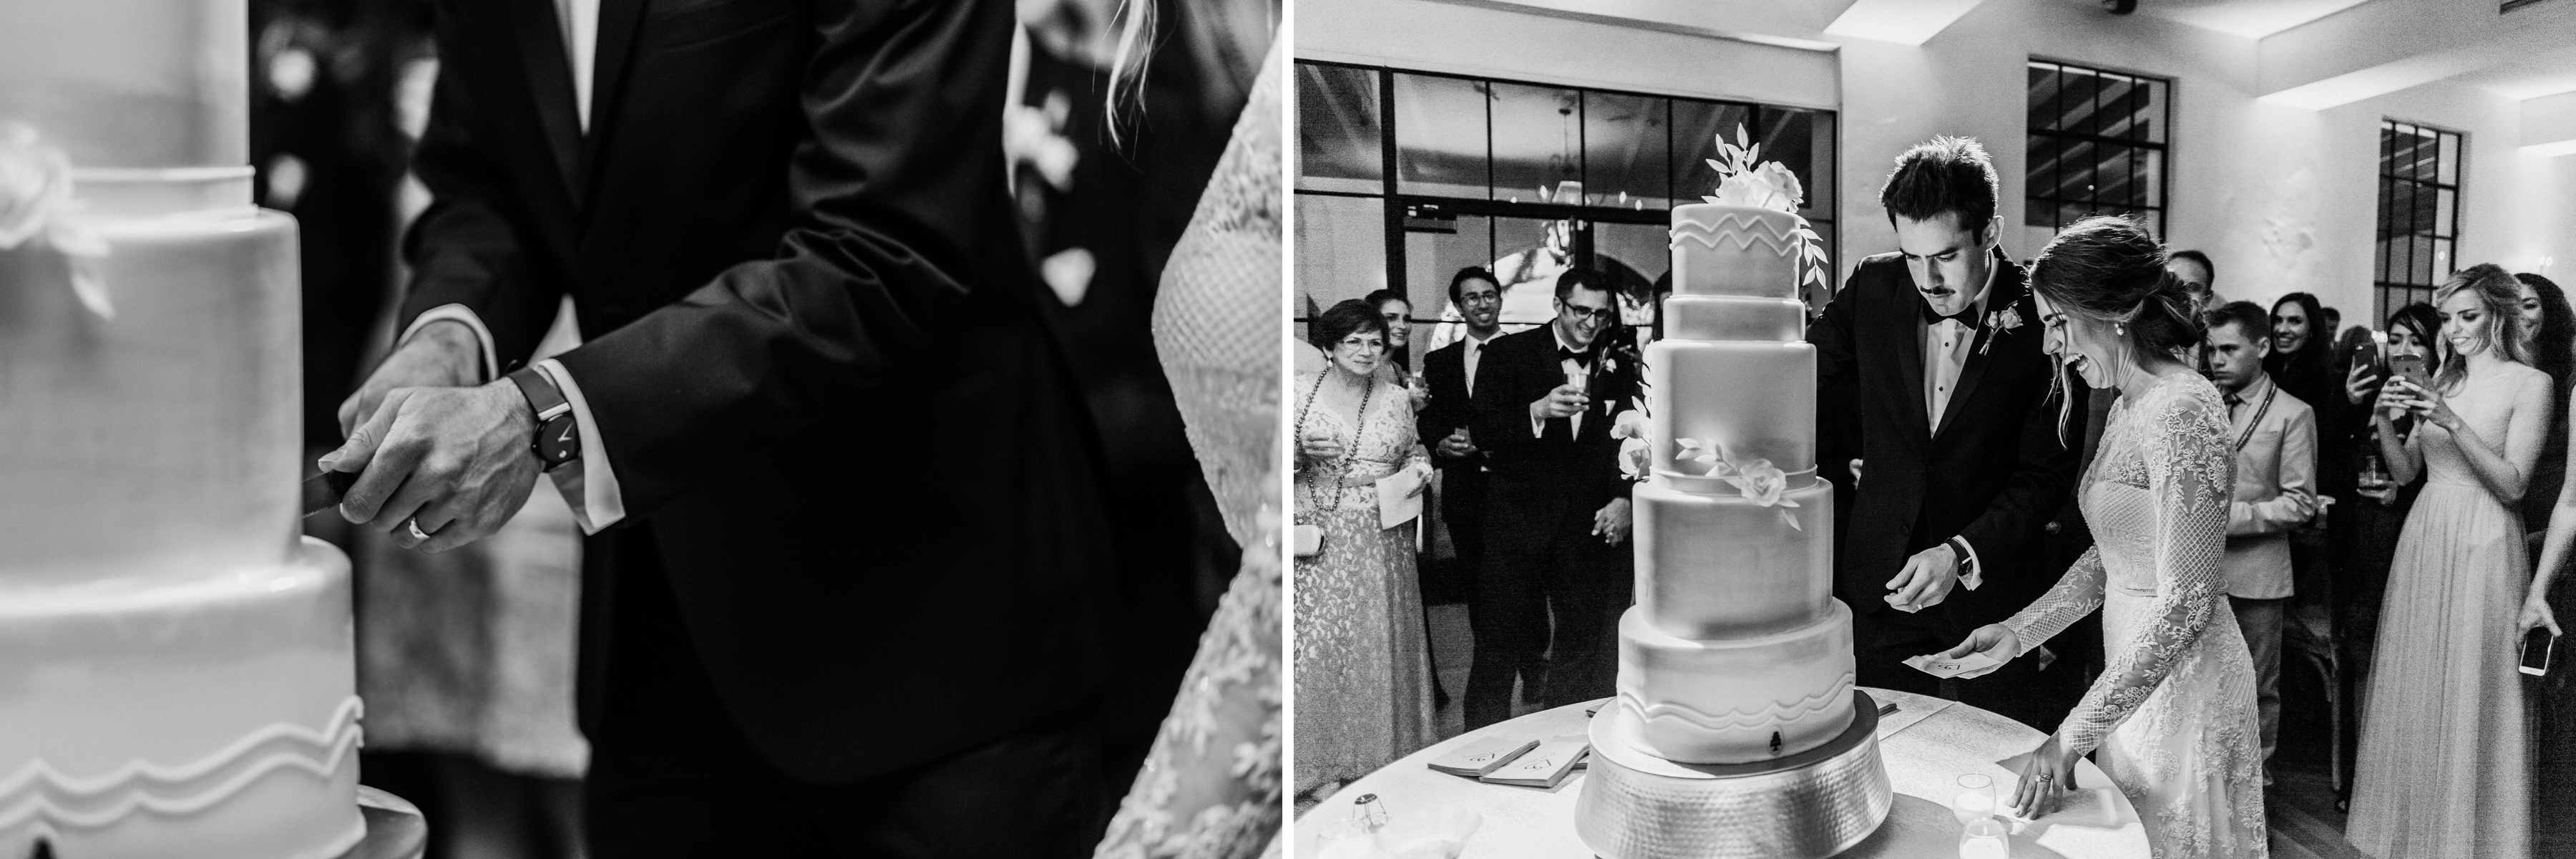 MULLET_WEDDING_NEW_ORLEANS_LOUISIANA_WEDDING_PHOTOGRAPHY_169